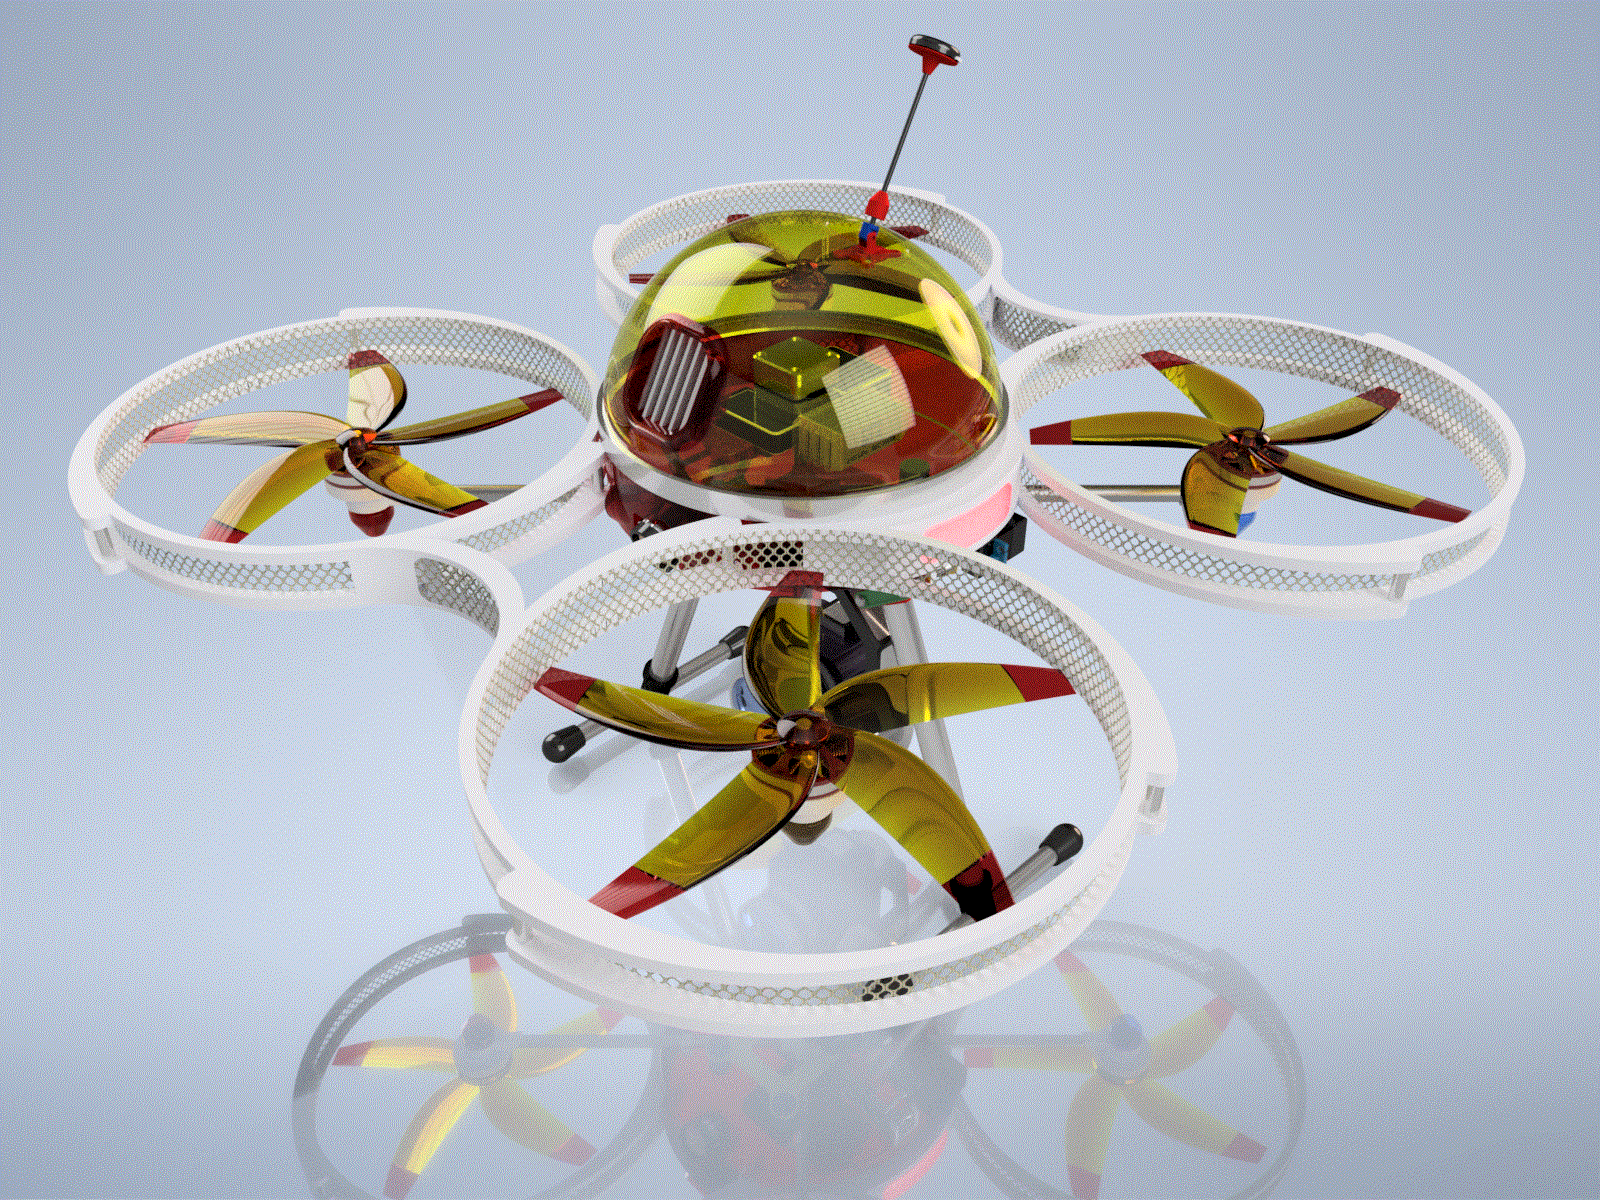 imaginative quadcopter四轴飞行器无人机.zip